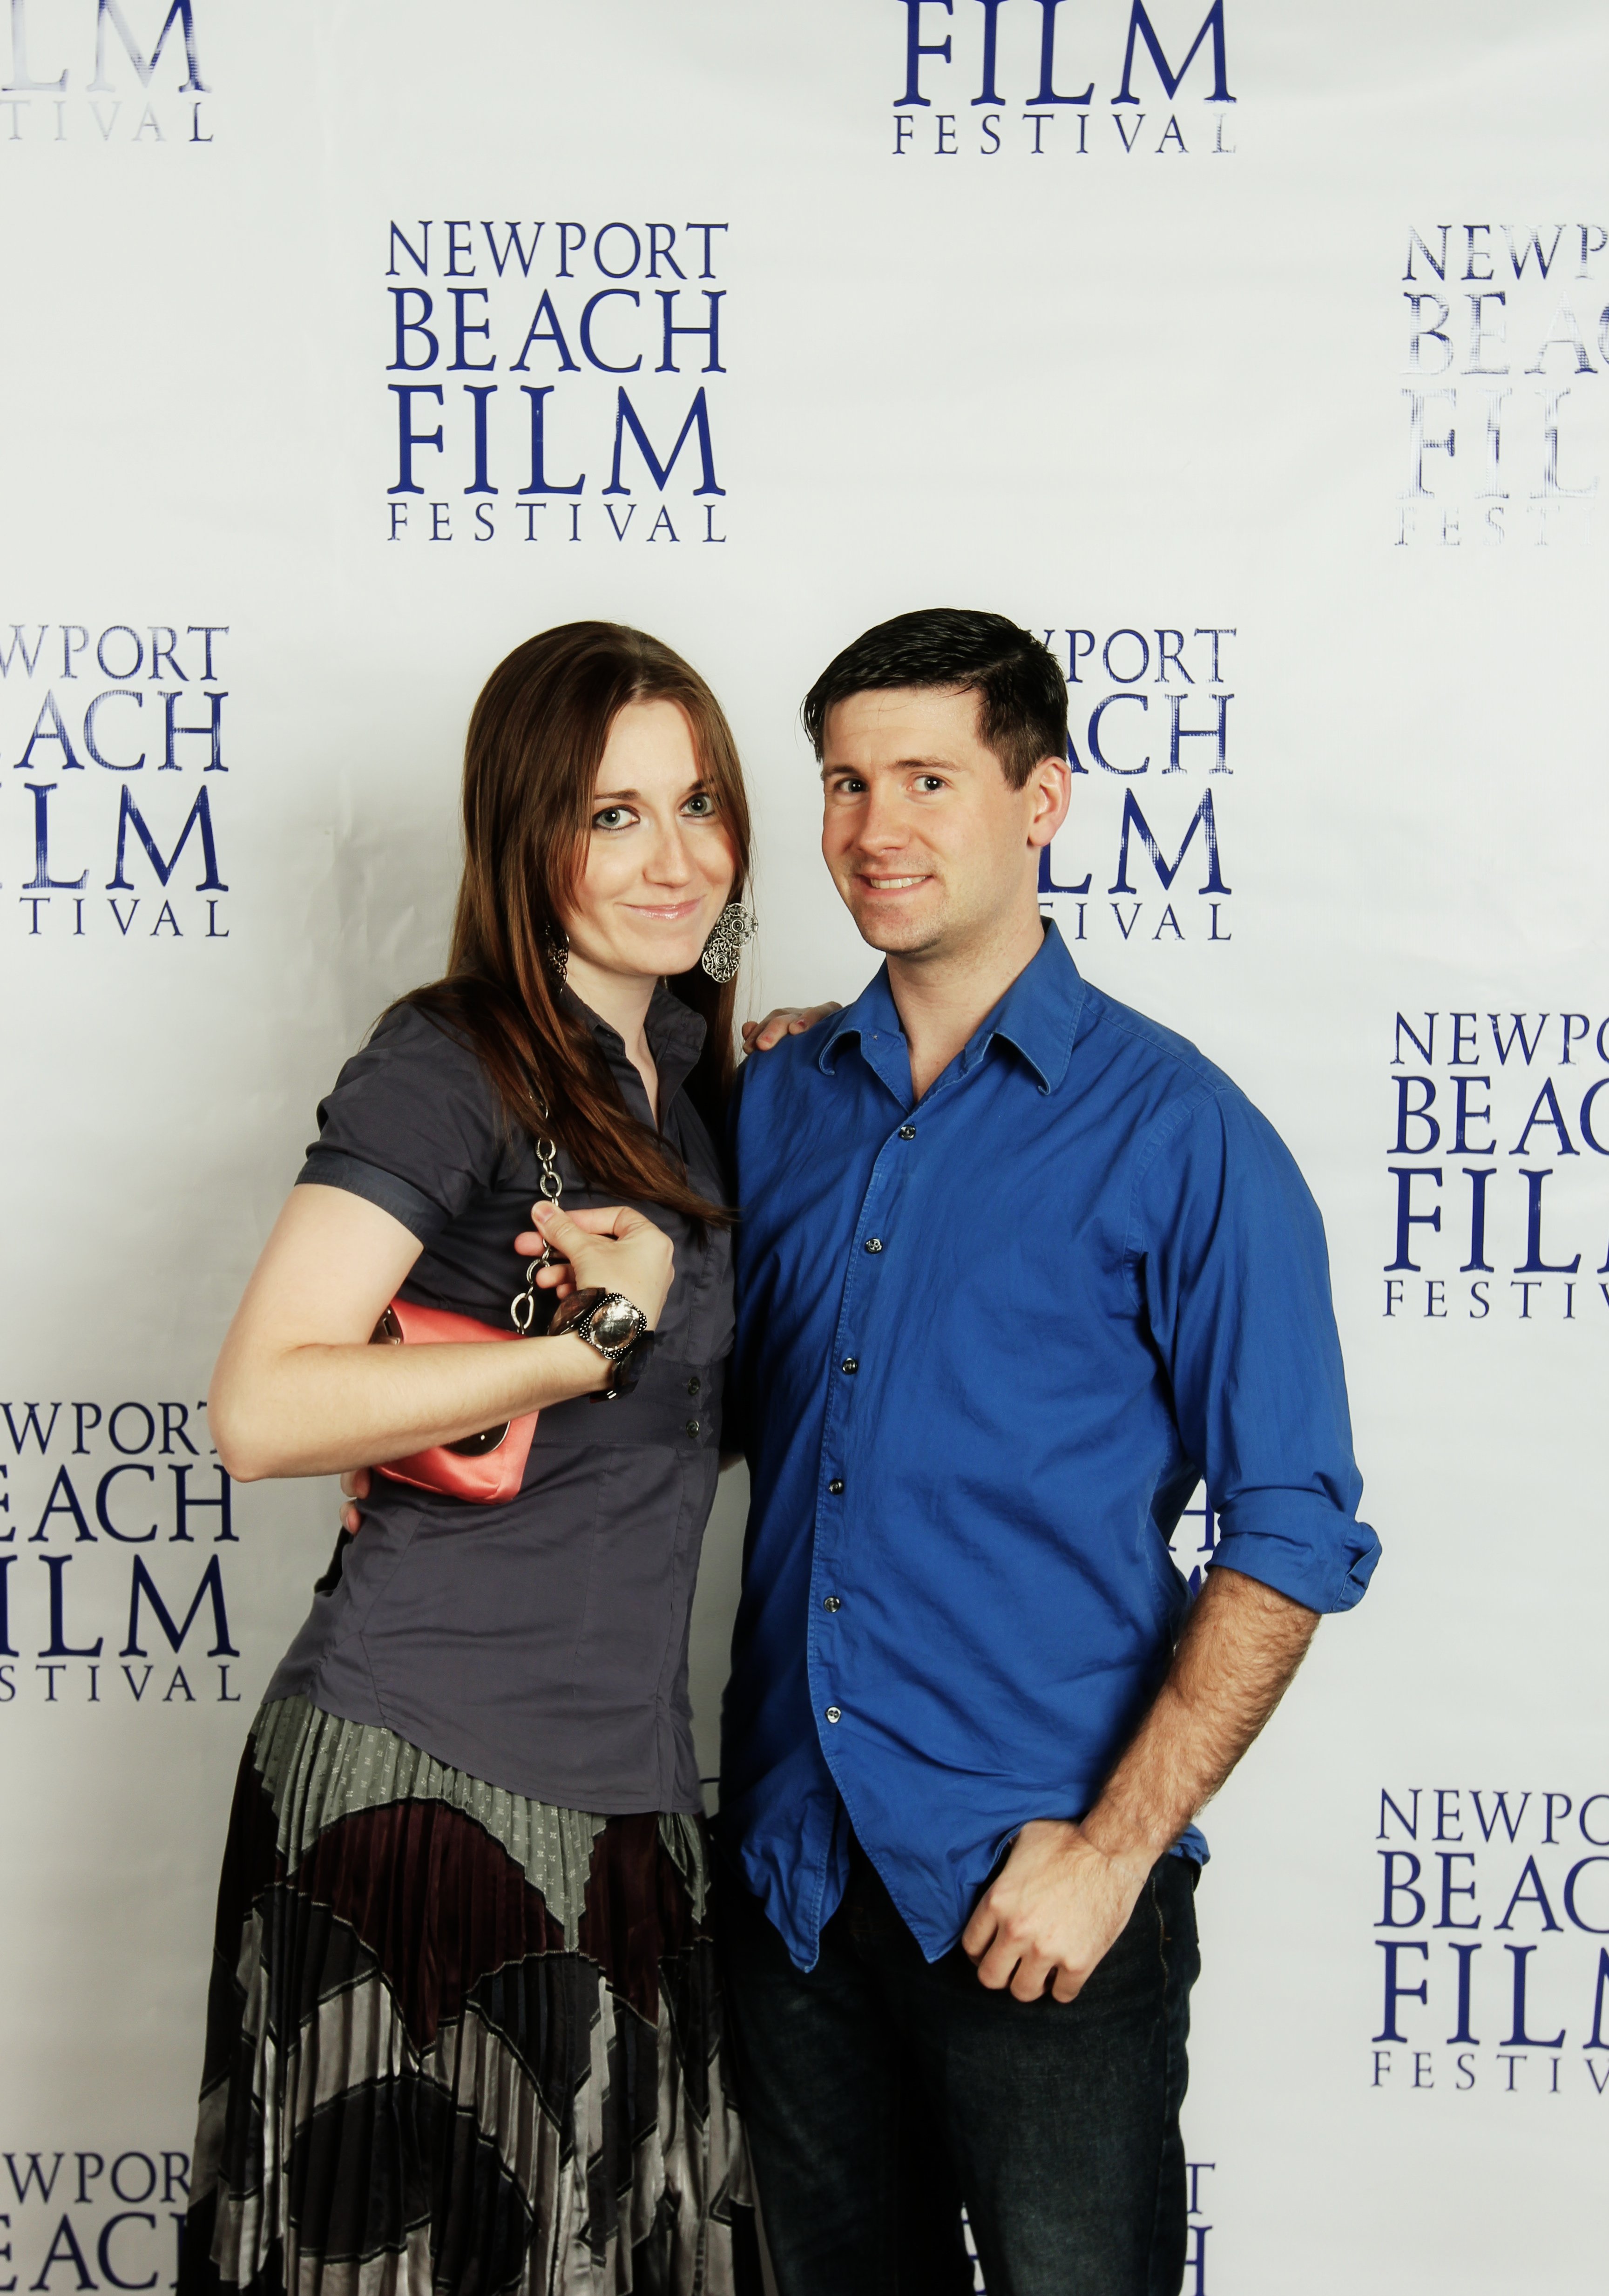 Newport Film Festival 2012